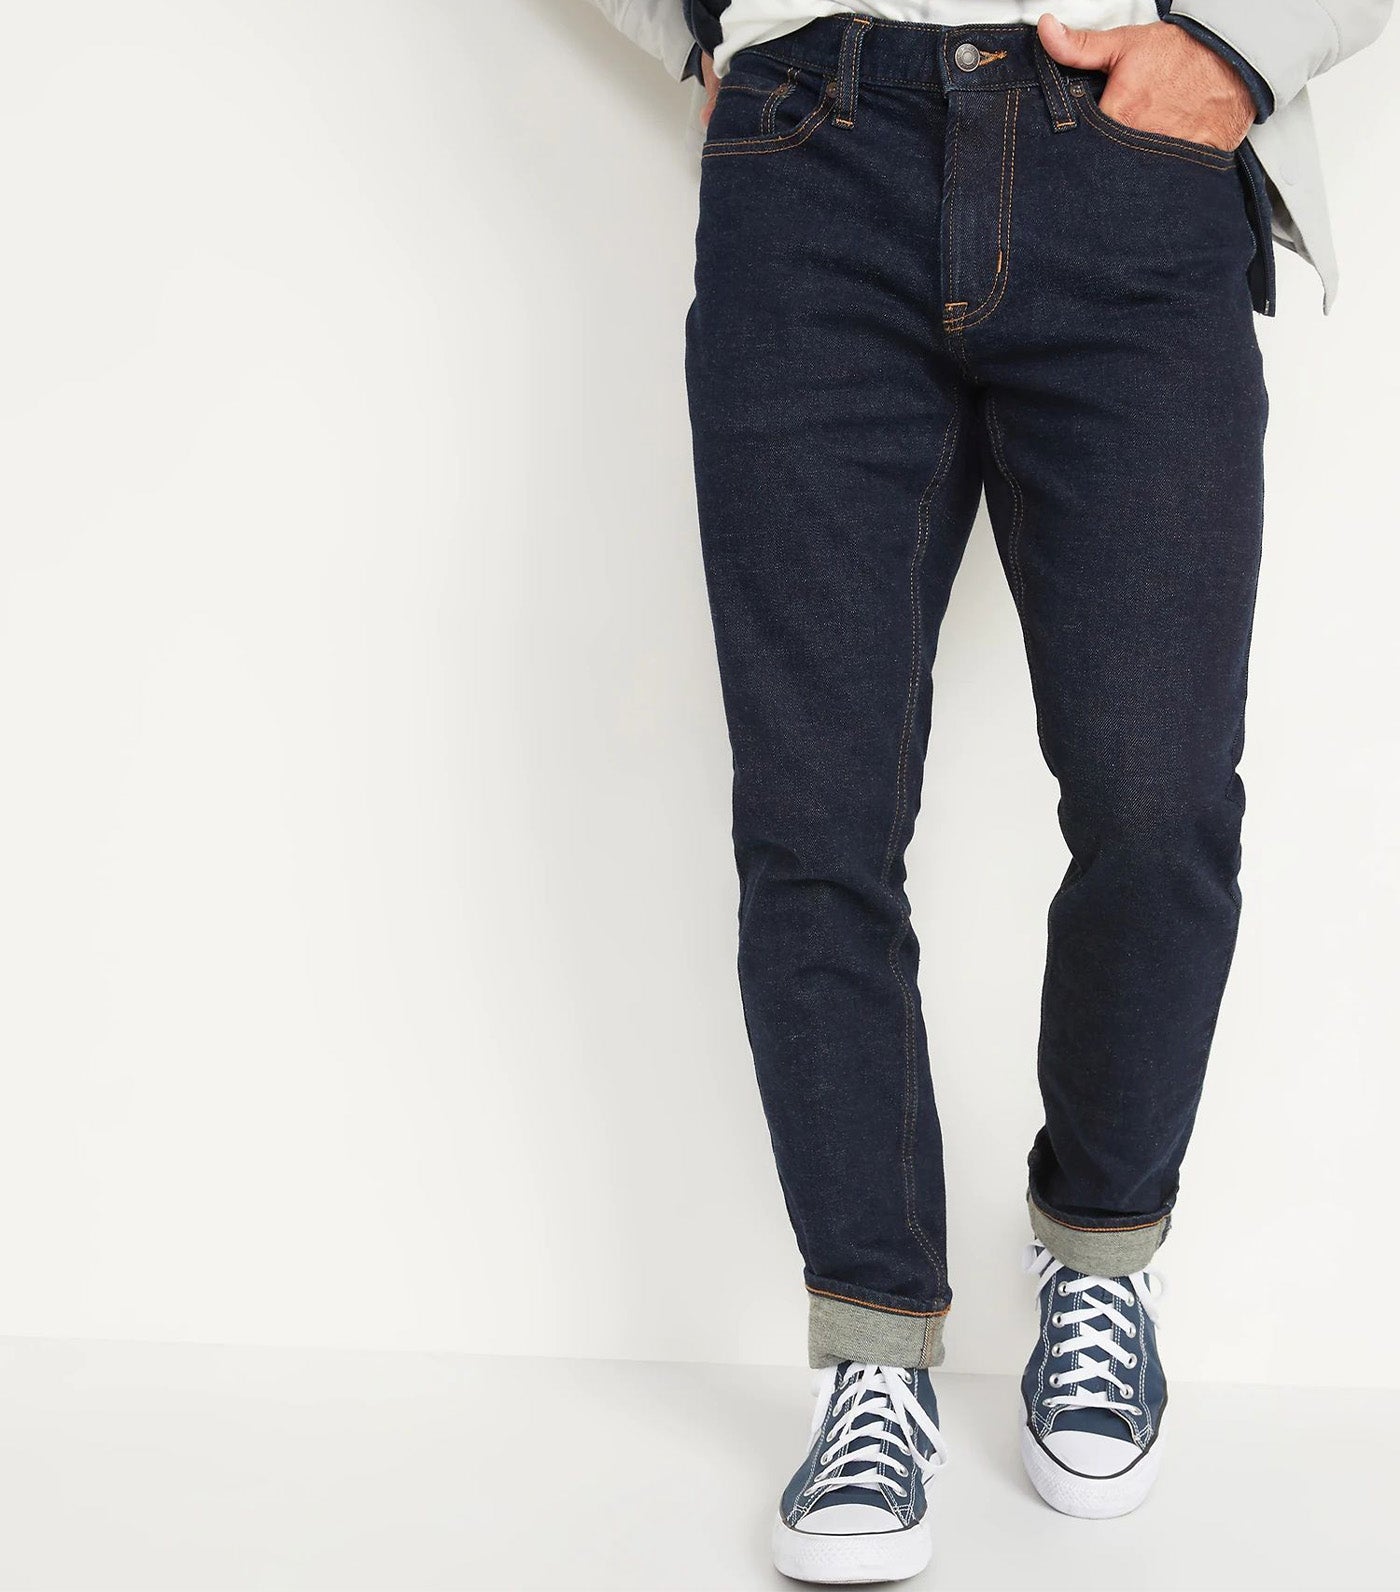 Skinny Built-In Flex Jeans For Men Rinse